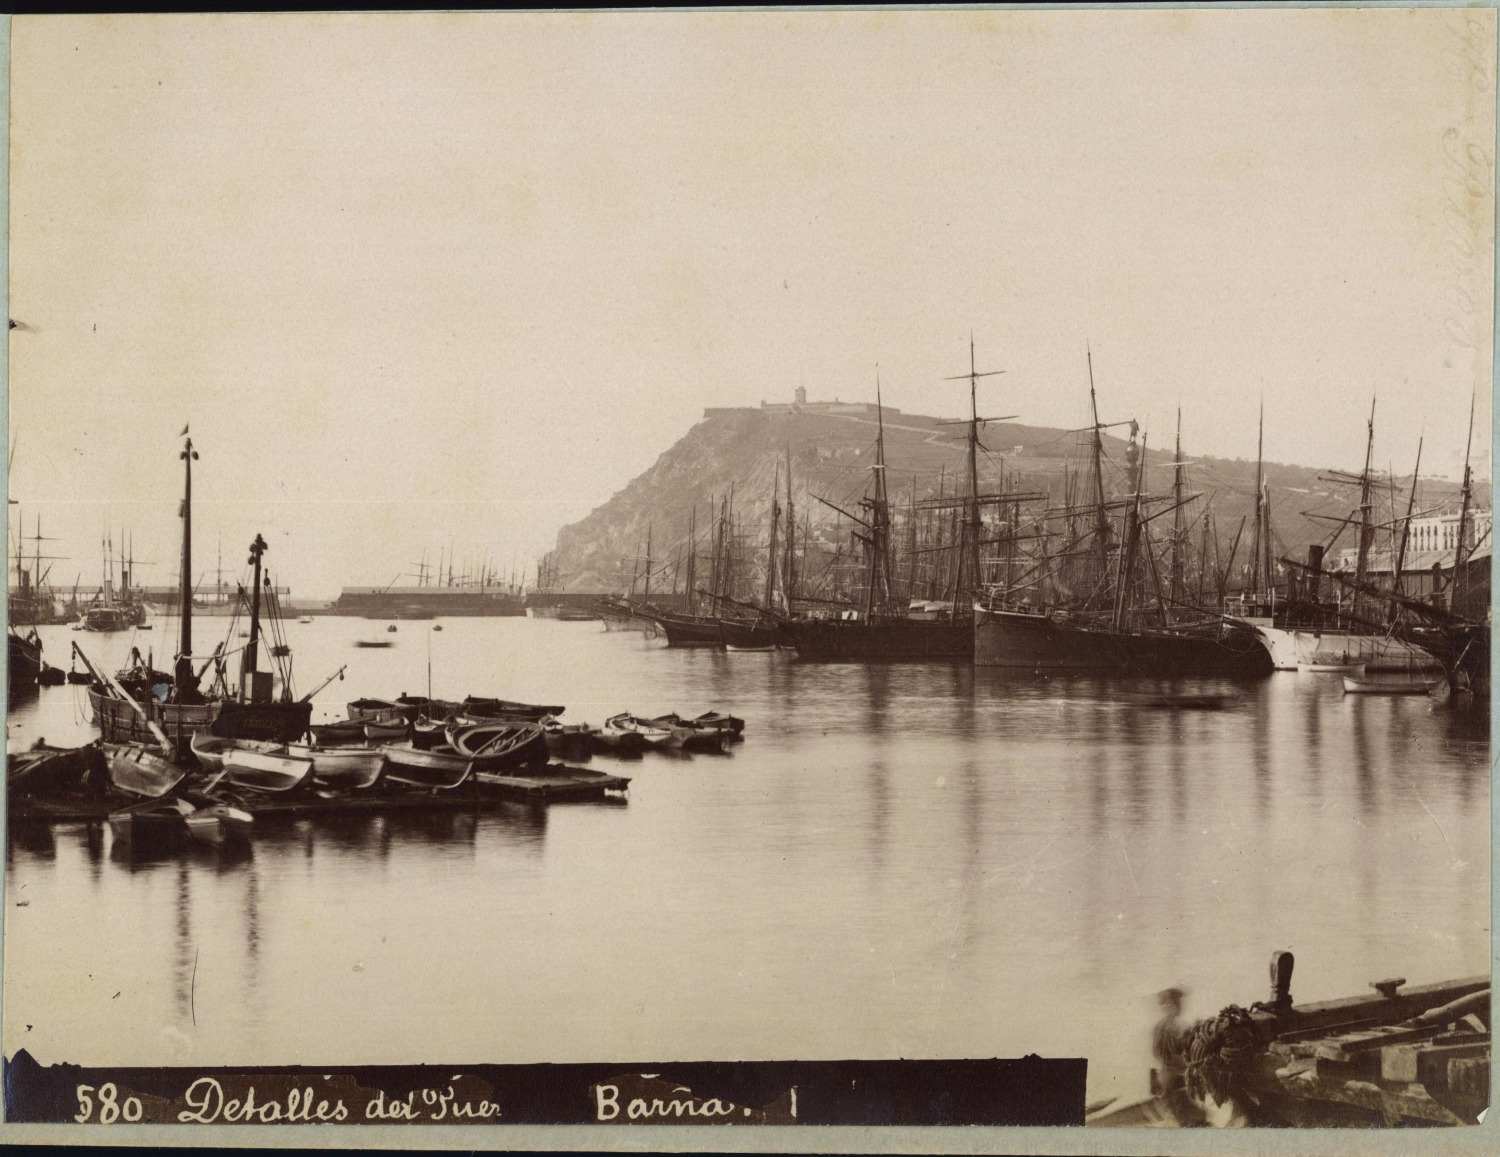 Spain, Barcelona, the Port, ca.1880, vintage albumin print vintage print, le